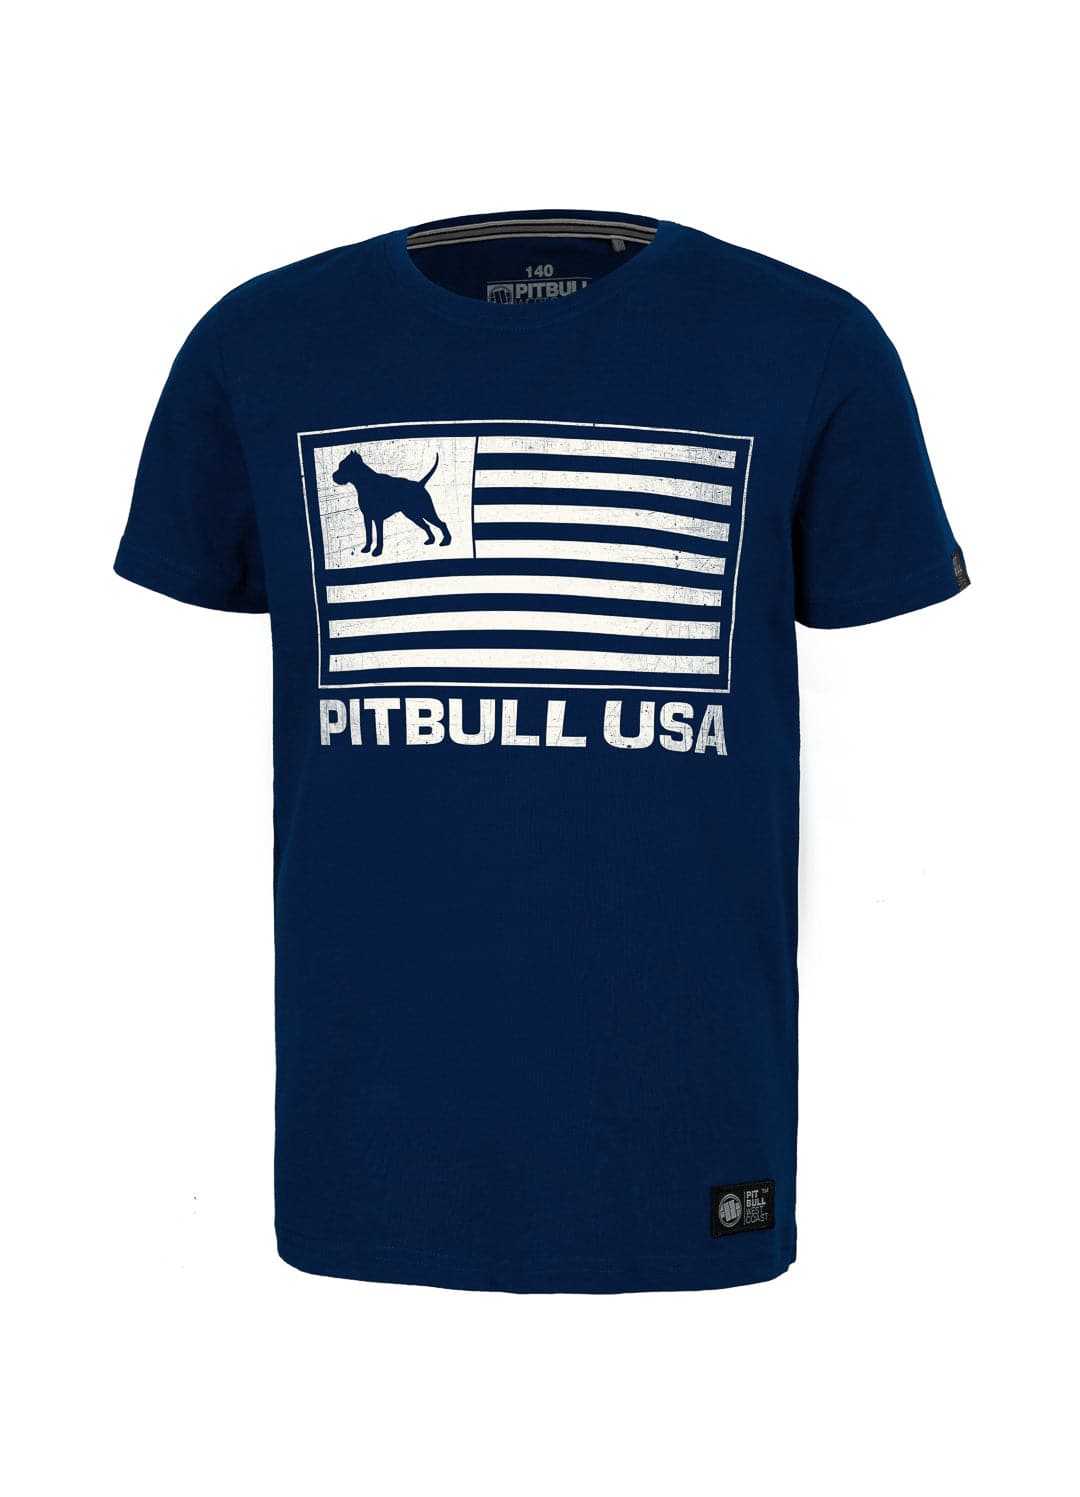 PITBULL USA kids dark navy t-shirt - Pitbull West Coast International Store 